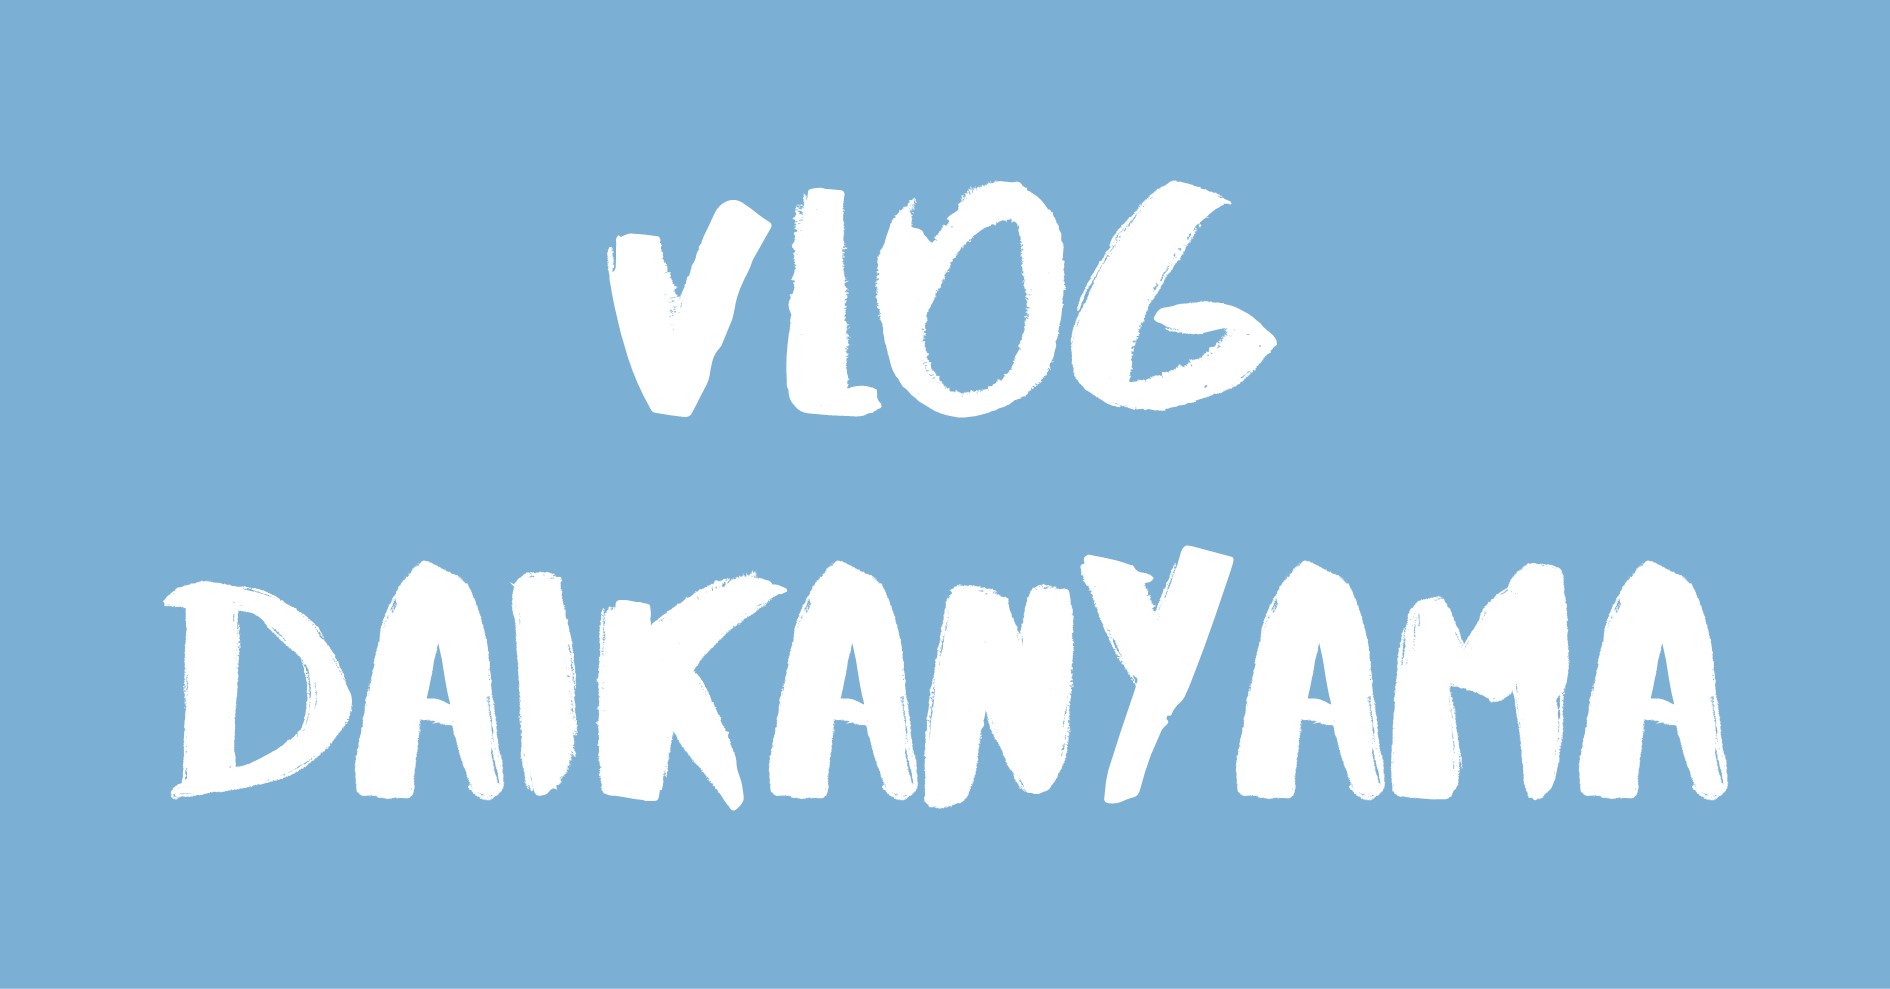 Vlog Daikanyama